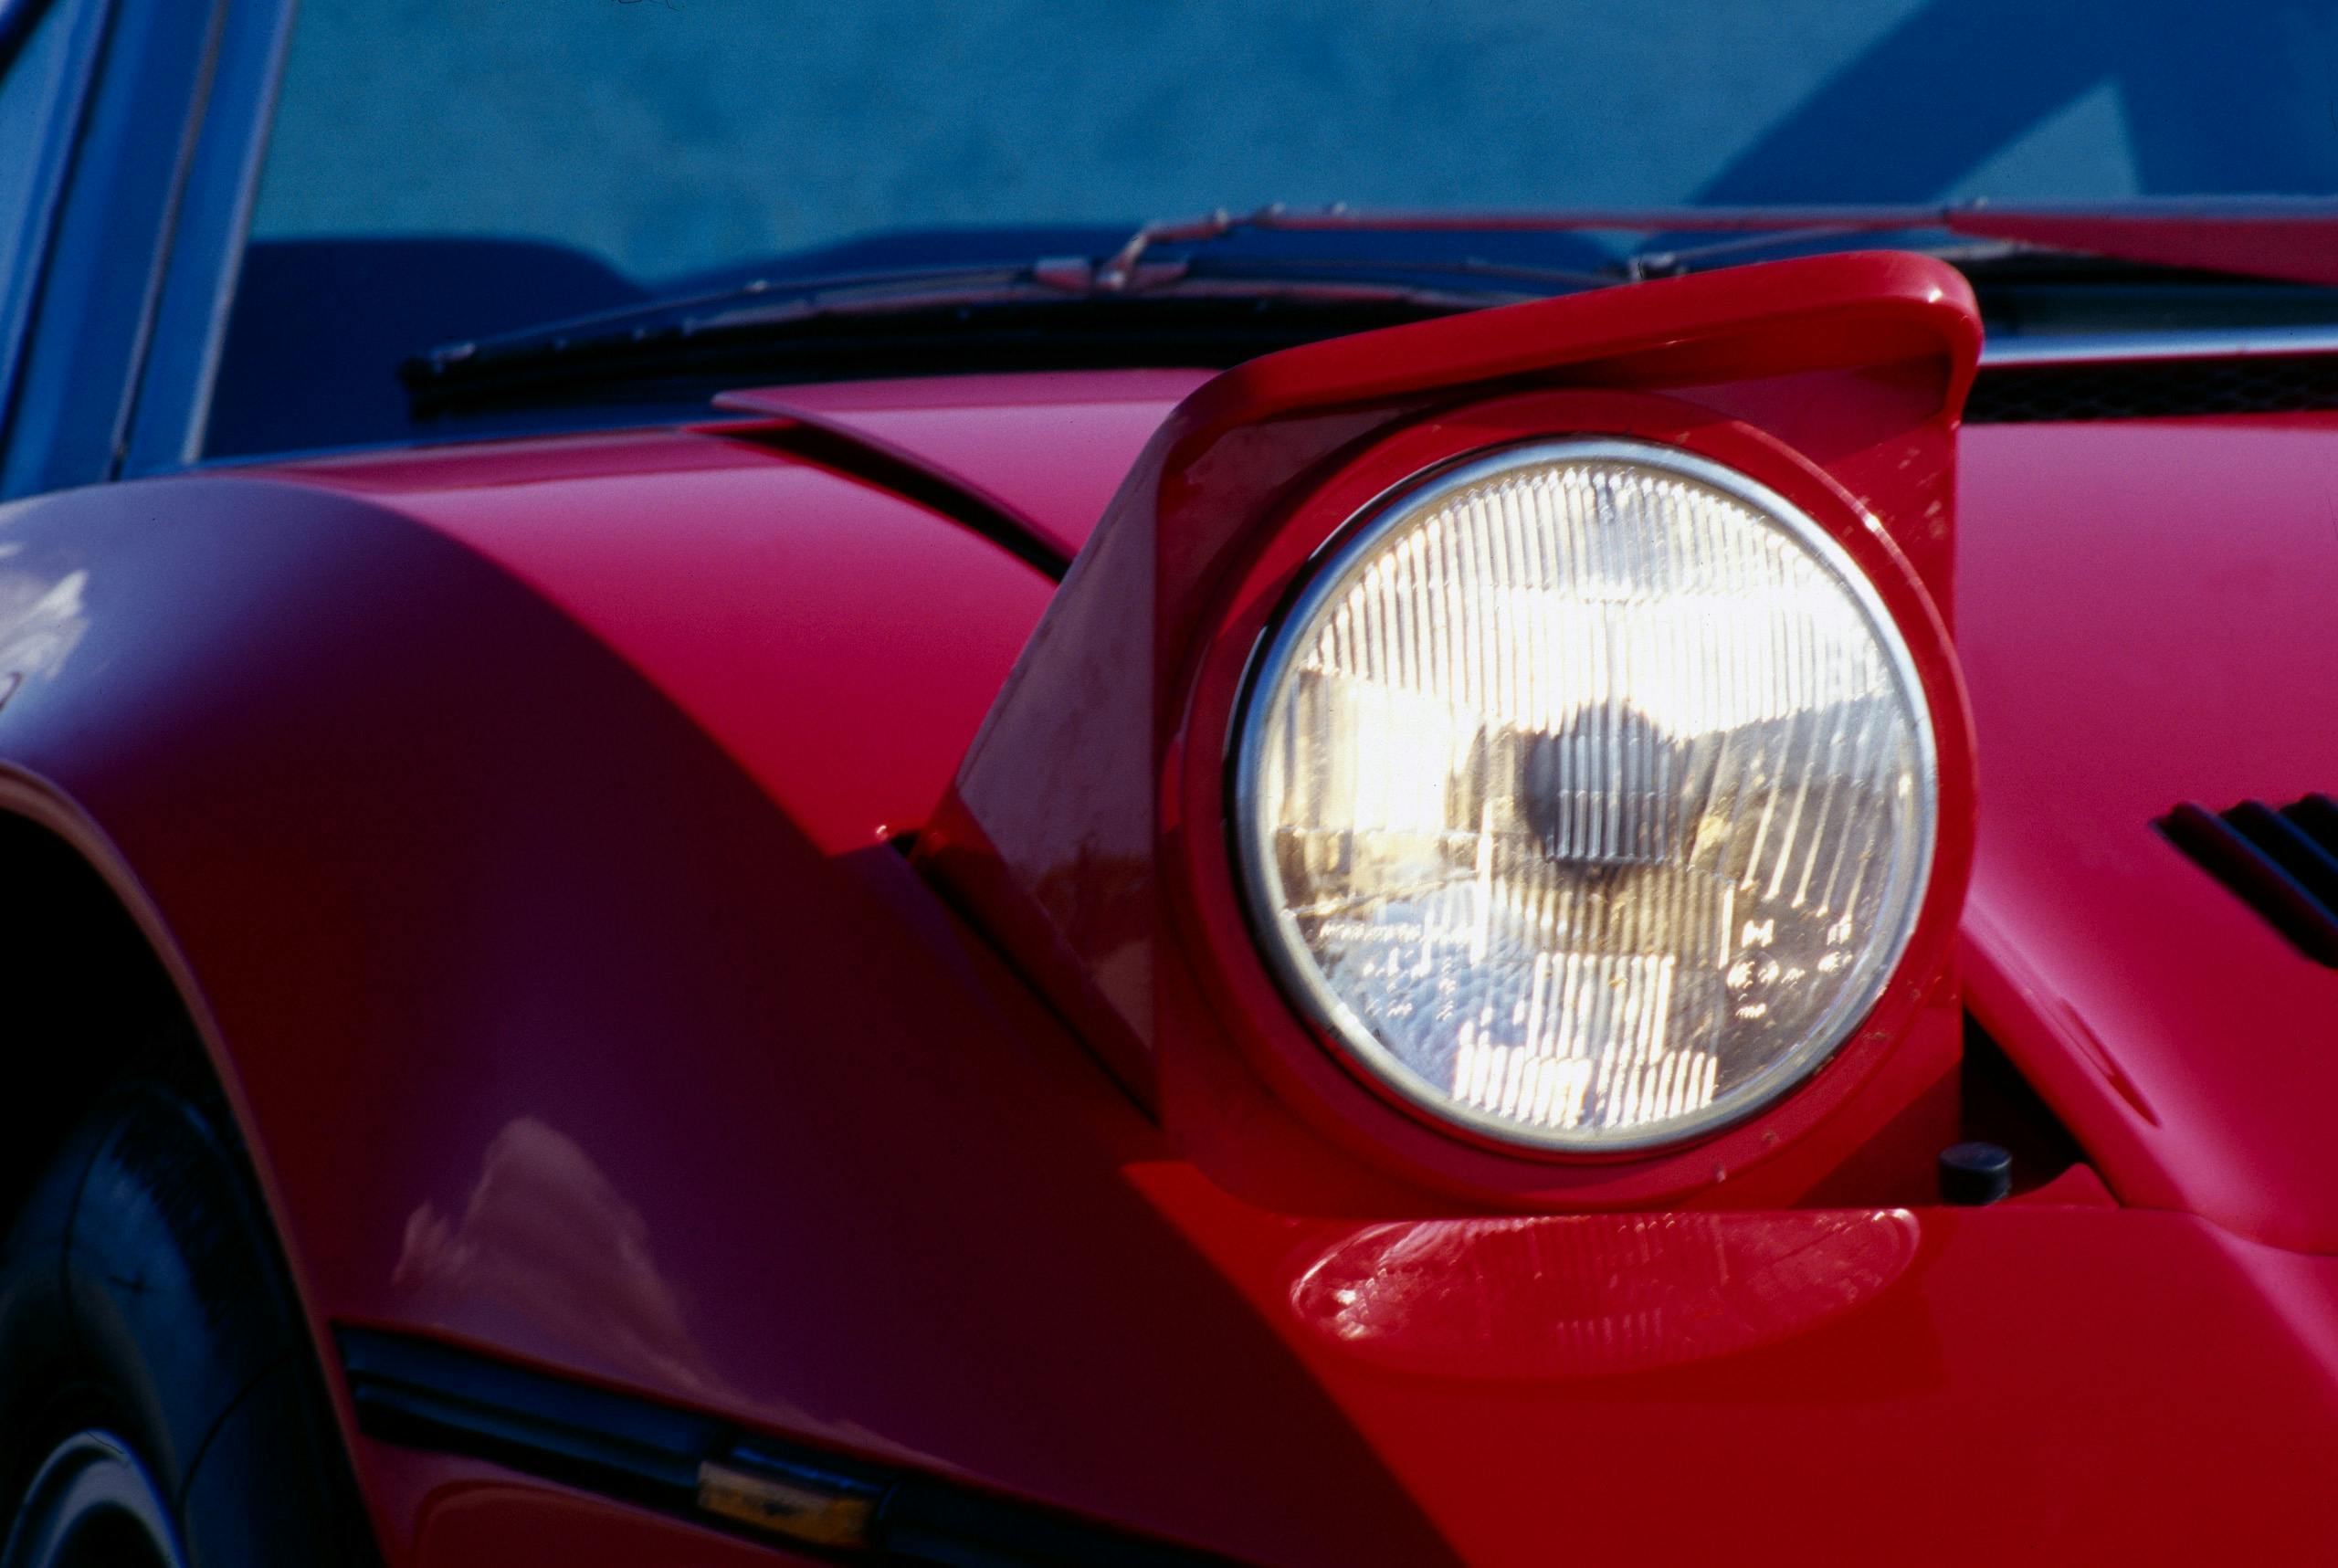 Maserati Bora headlight close